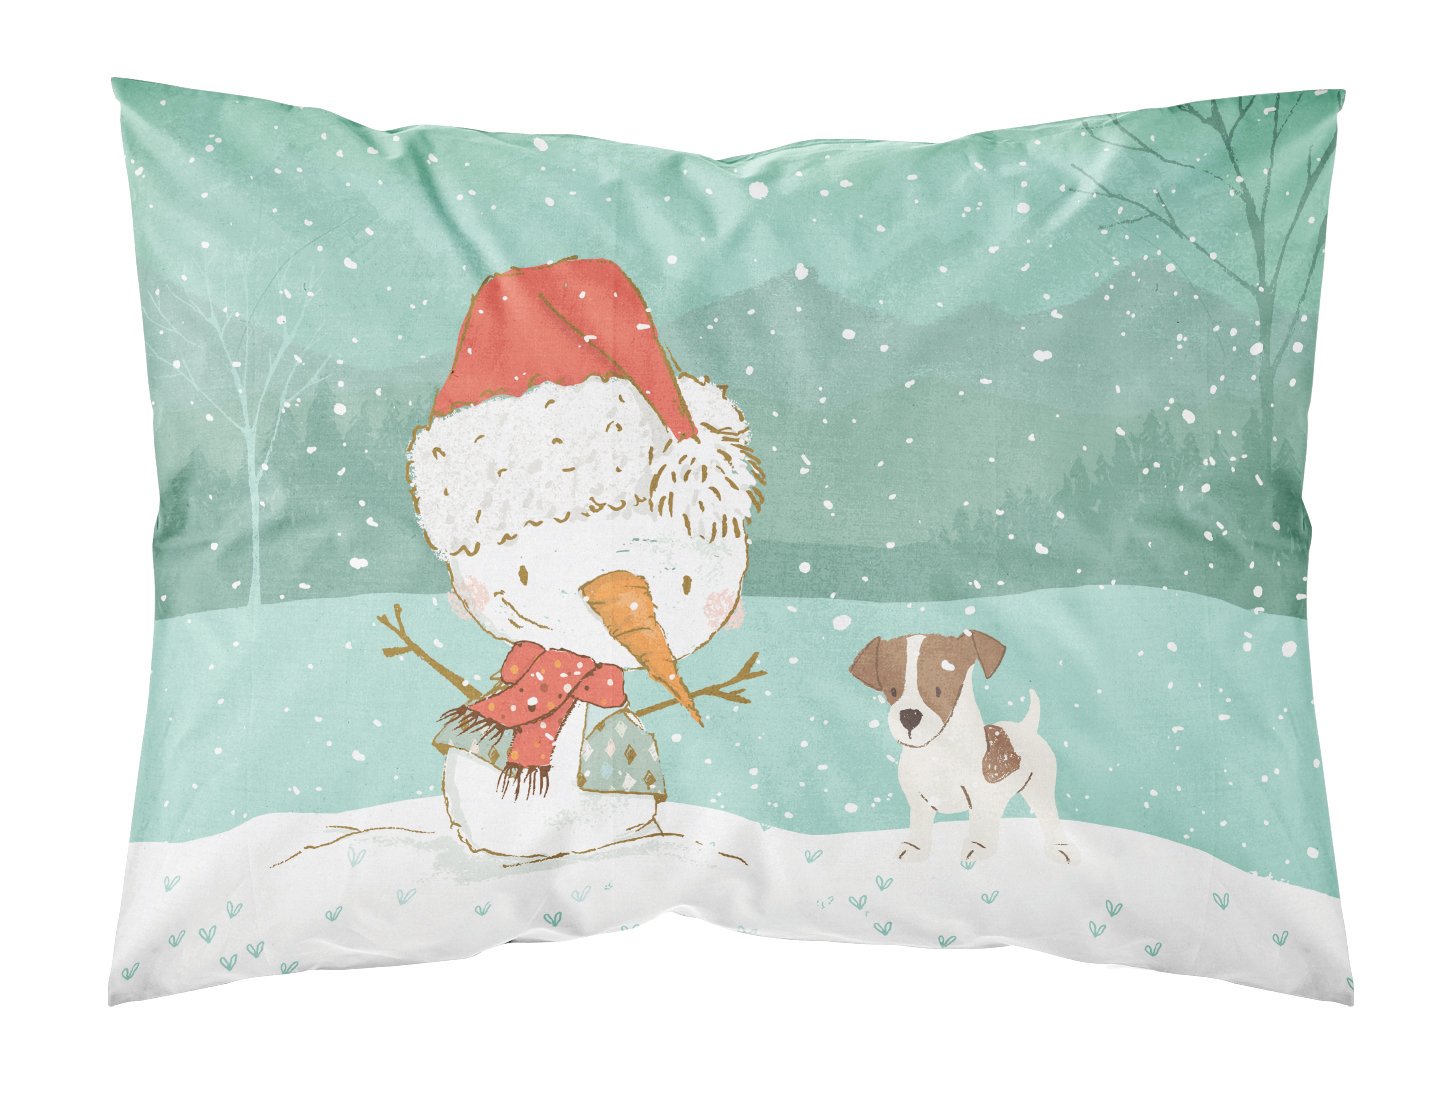 Jack Russell Terrier #2 Snowman Christmas Fabric Standard Pillowcase CK2091PILLOWCASE by Caroline's Treasures